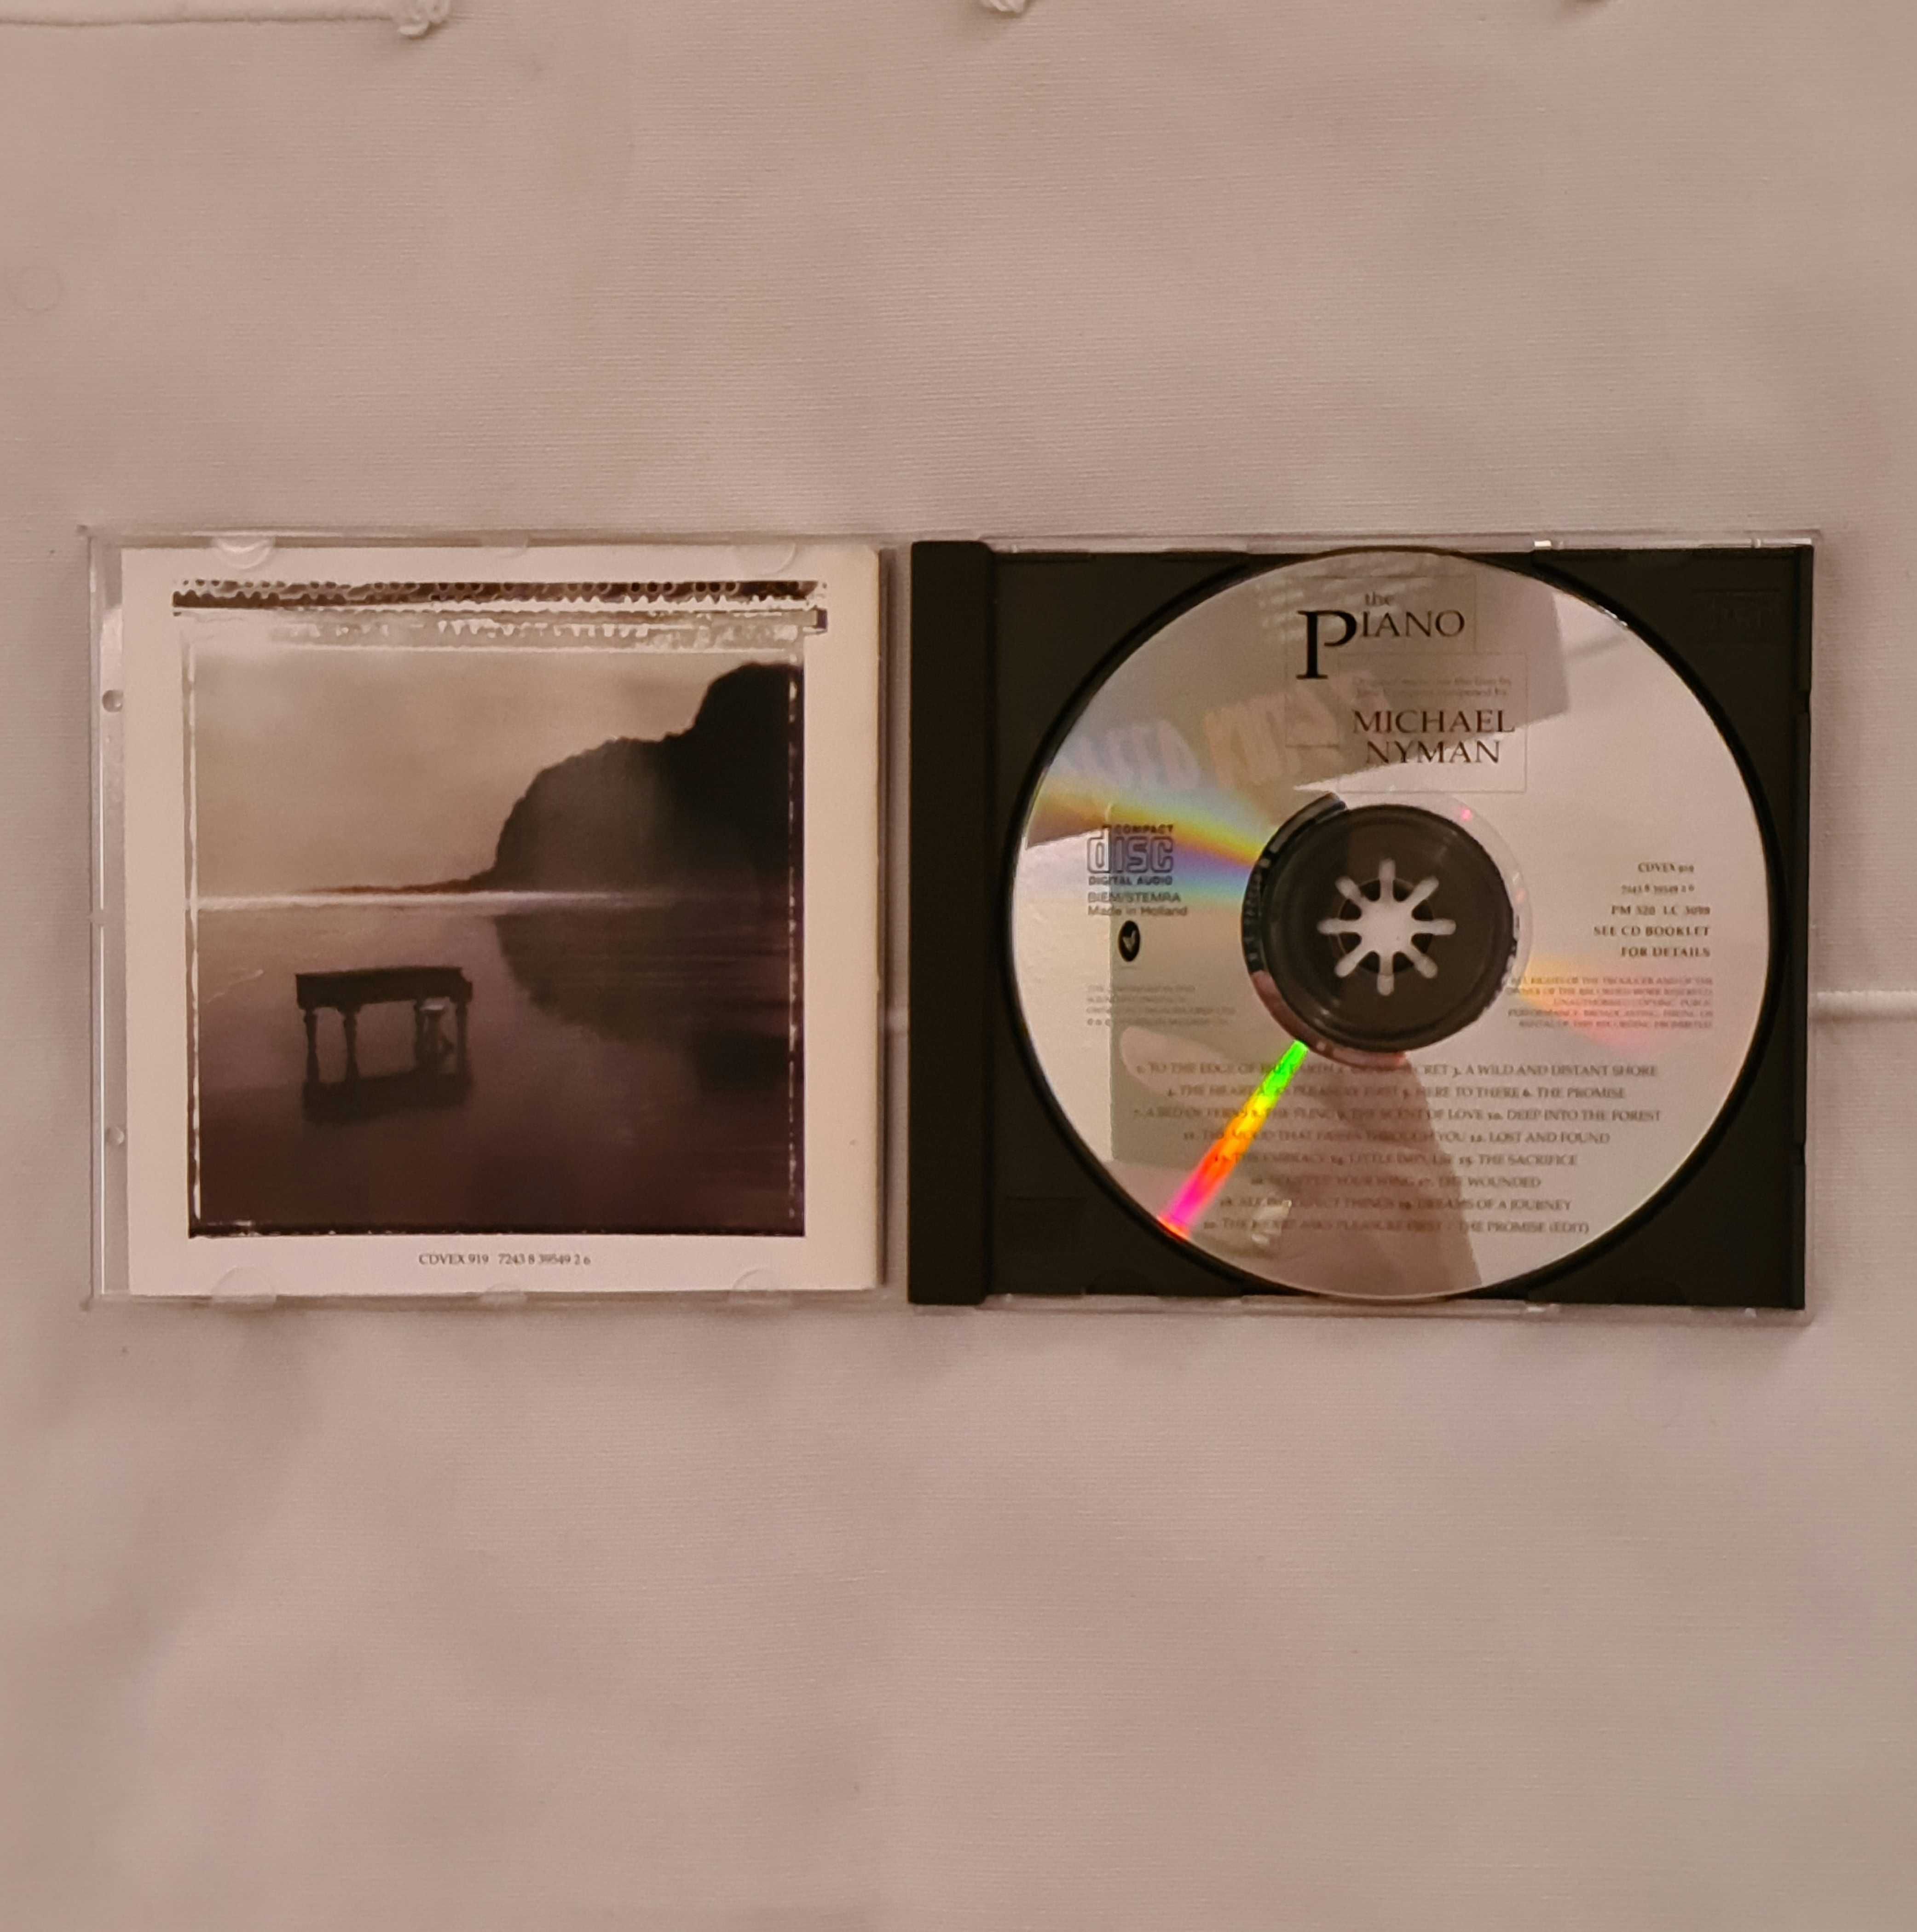 CD - The Piano (soundtrack) - Michael Nyman